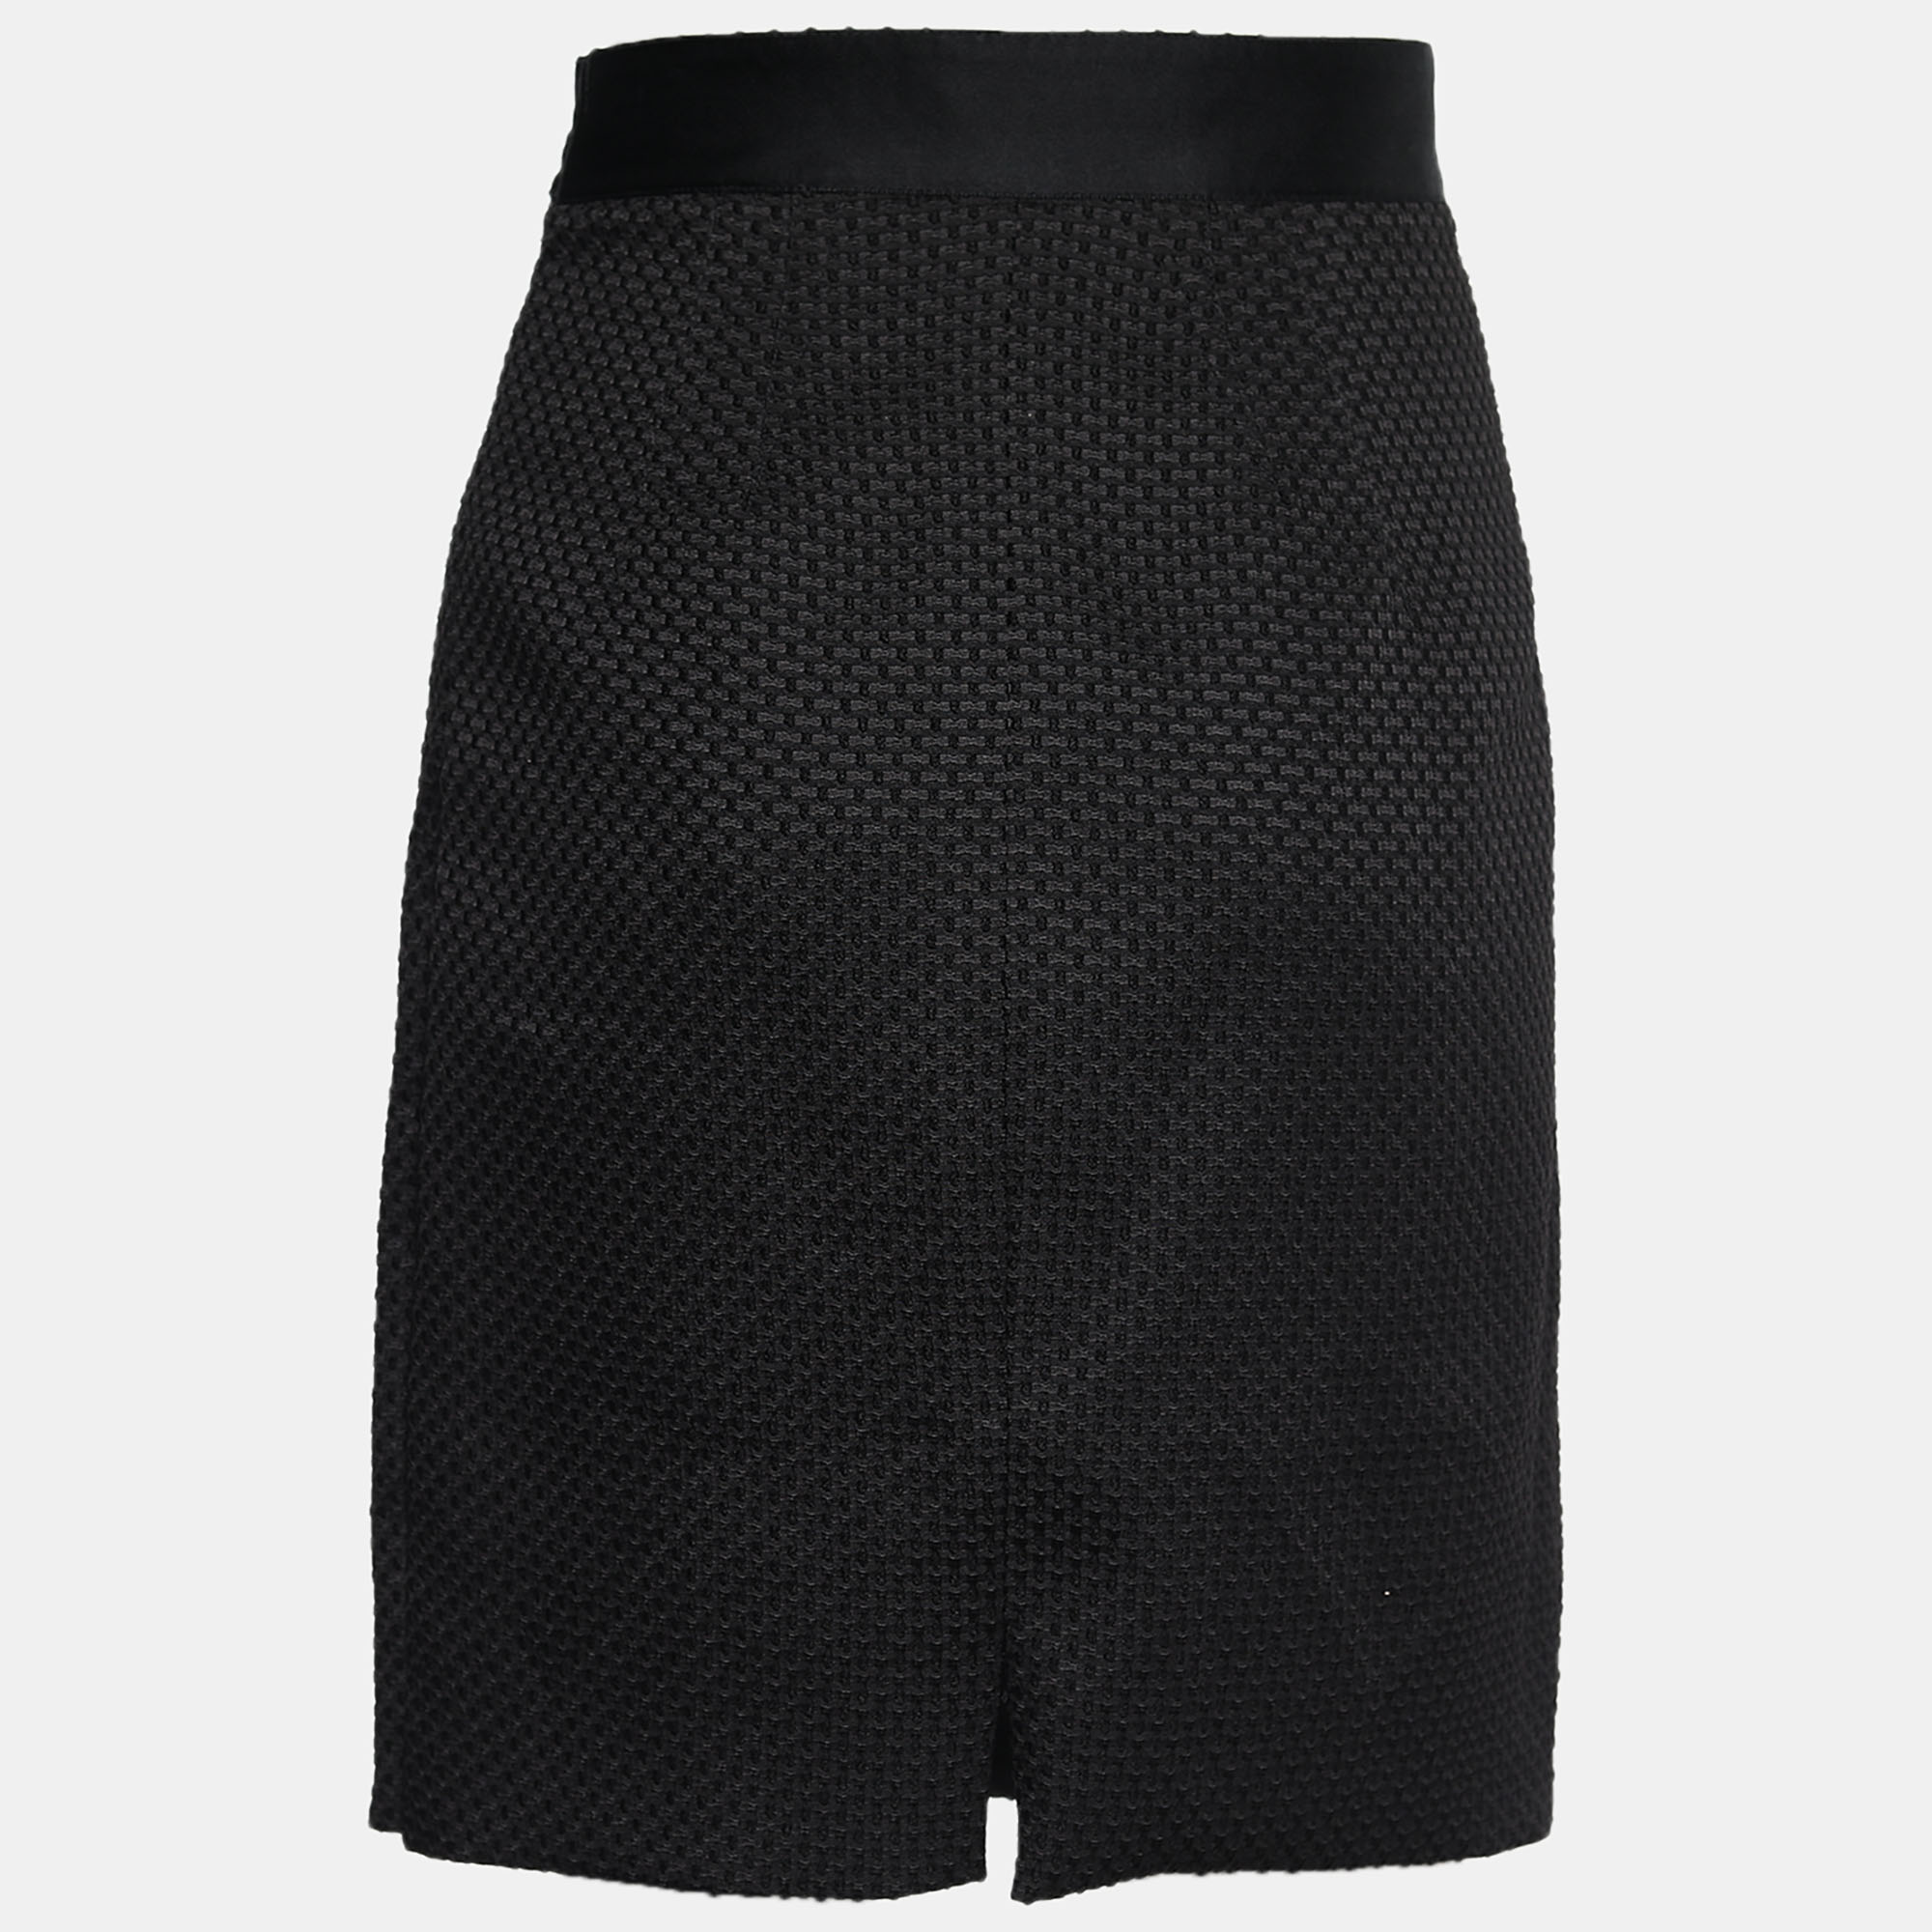 

CH Carolina Herrera Black Textured Synthetic Mini Skirt